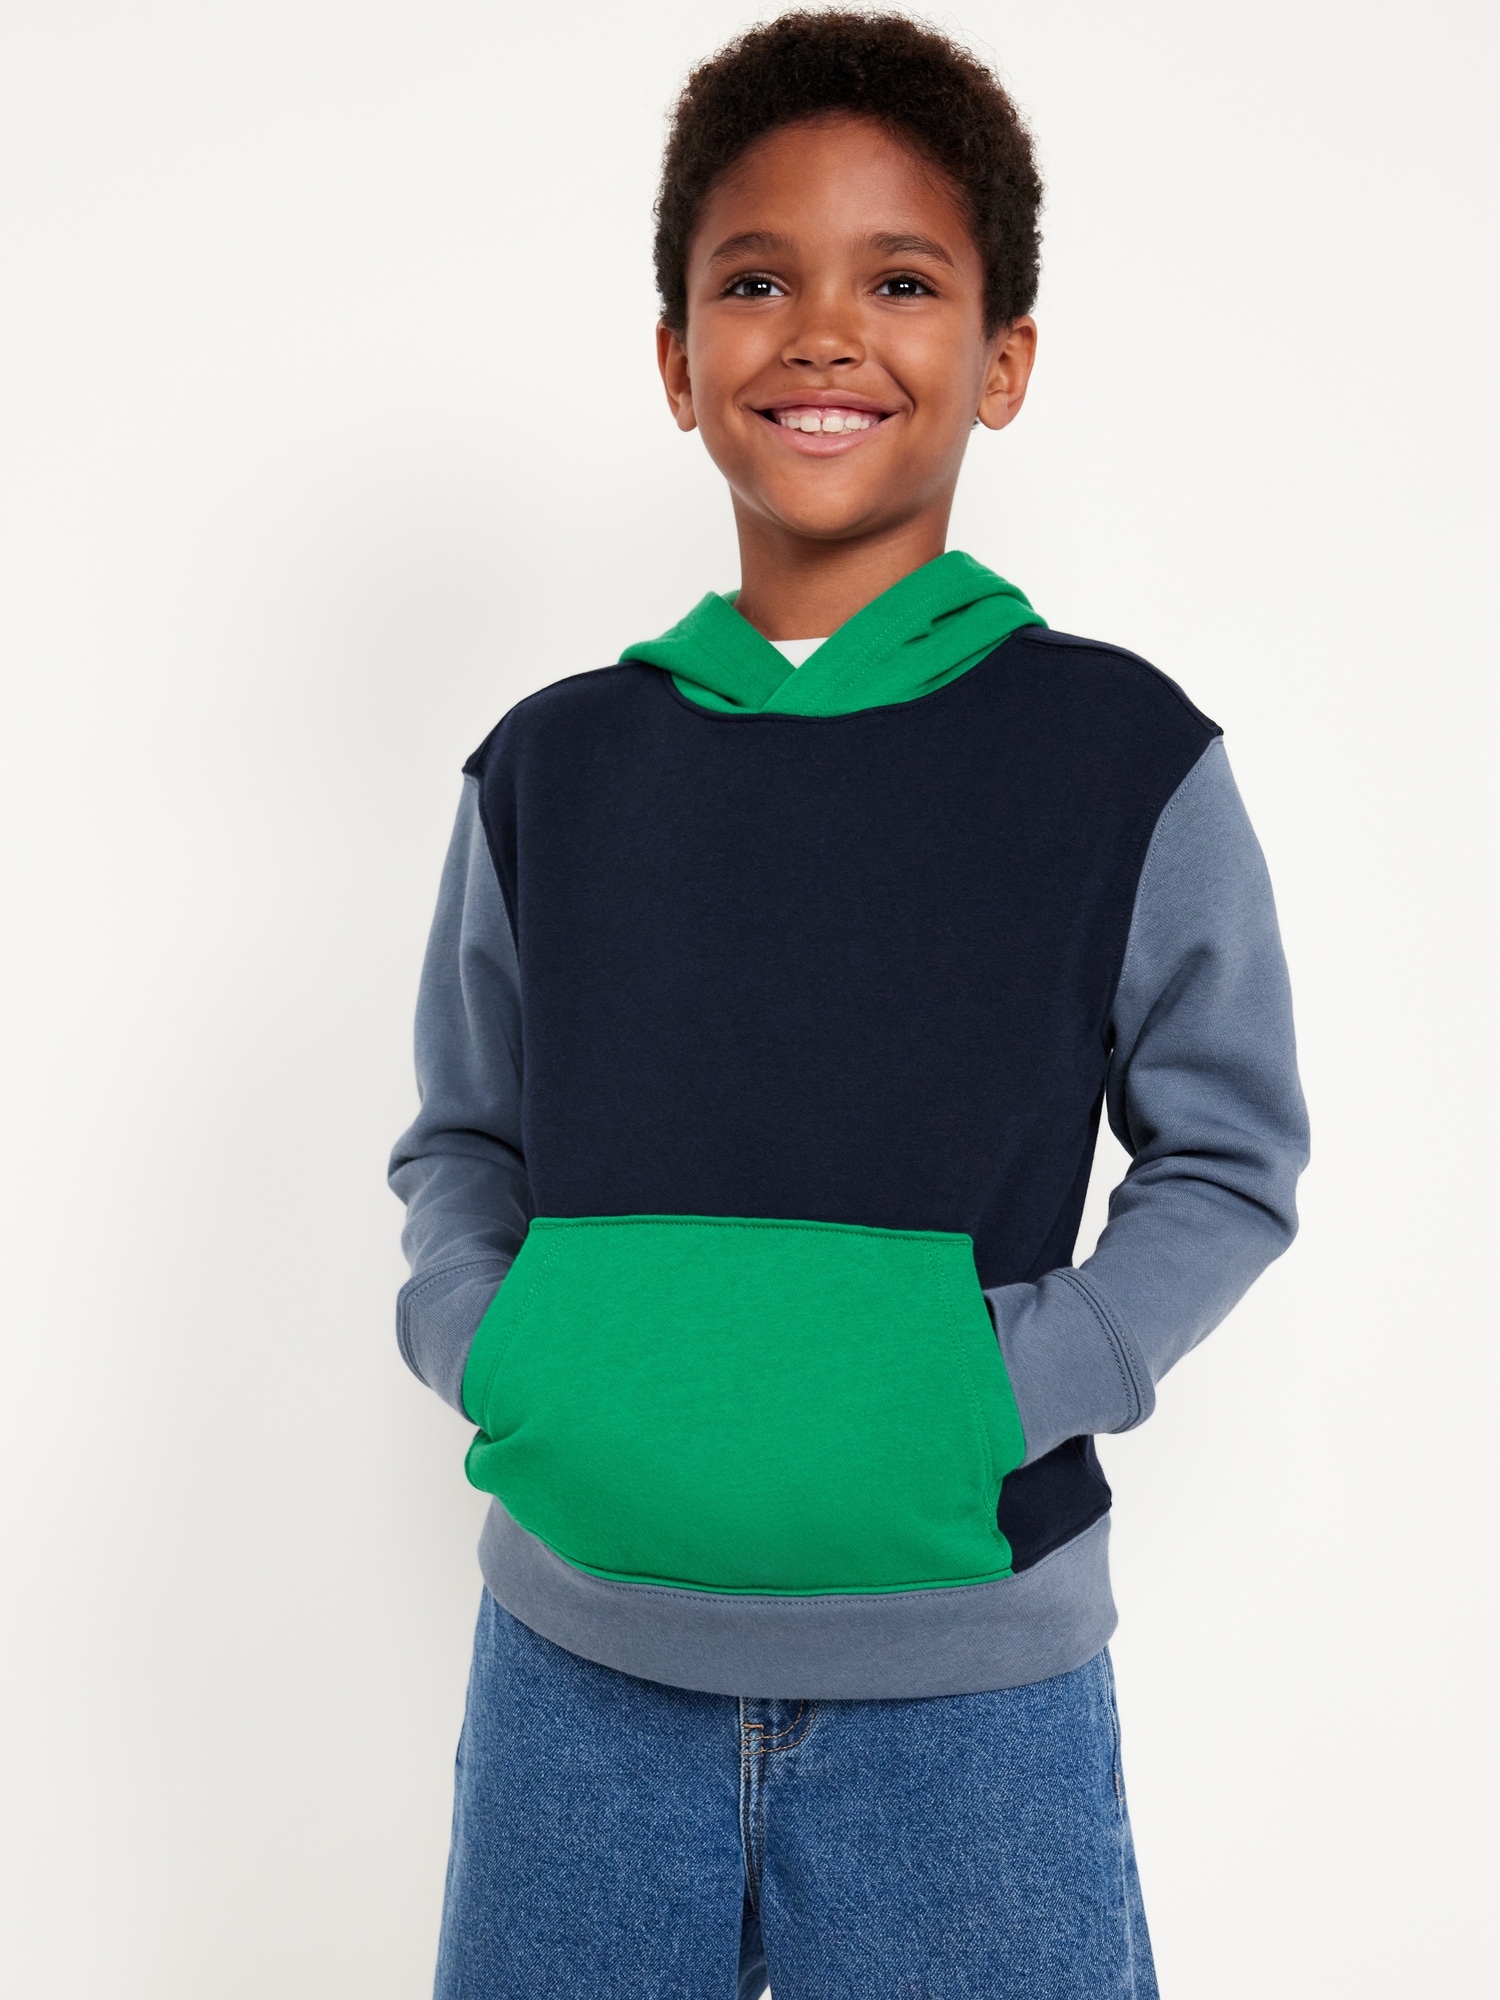 Gender-Neutral Pullover Hoodie for Kids